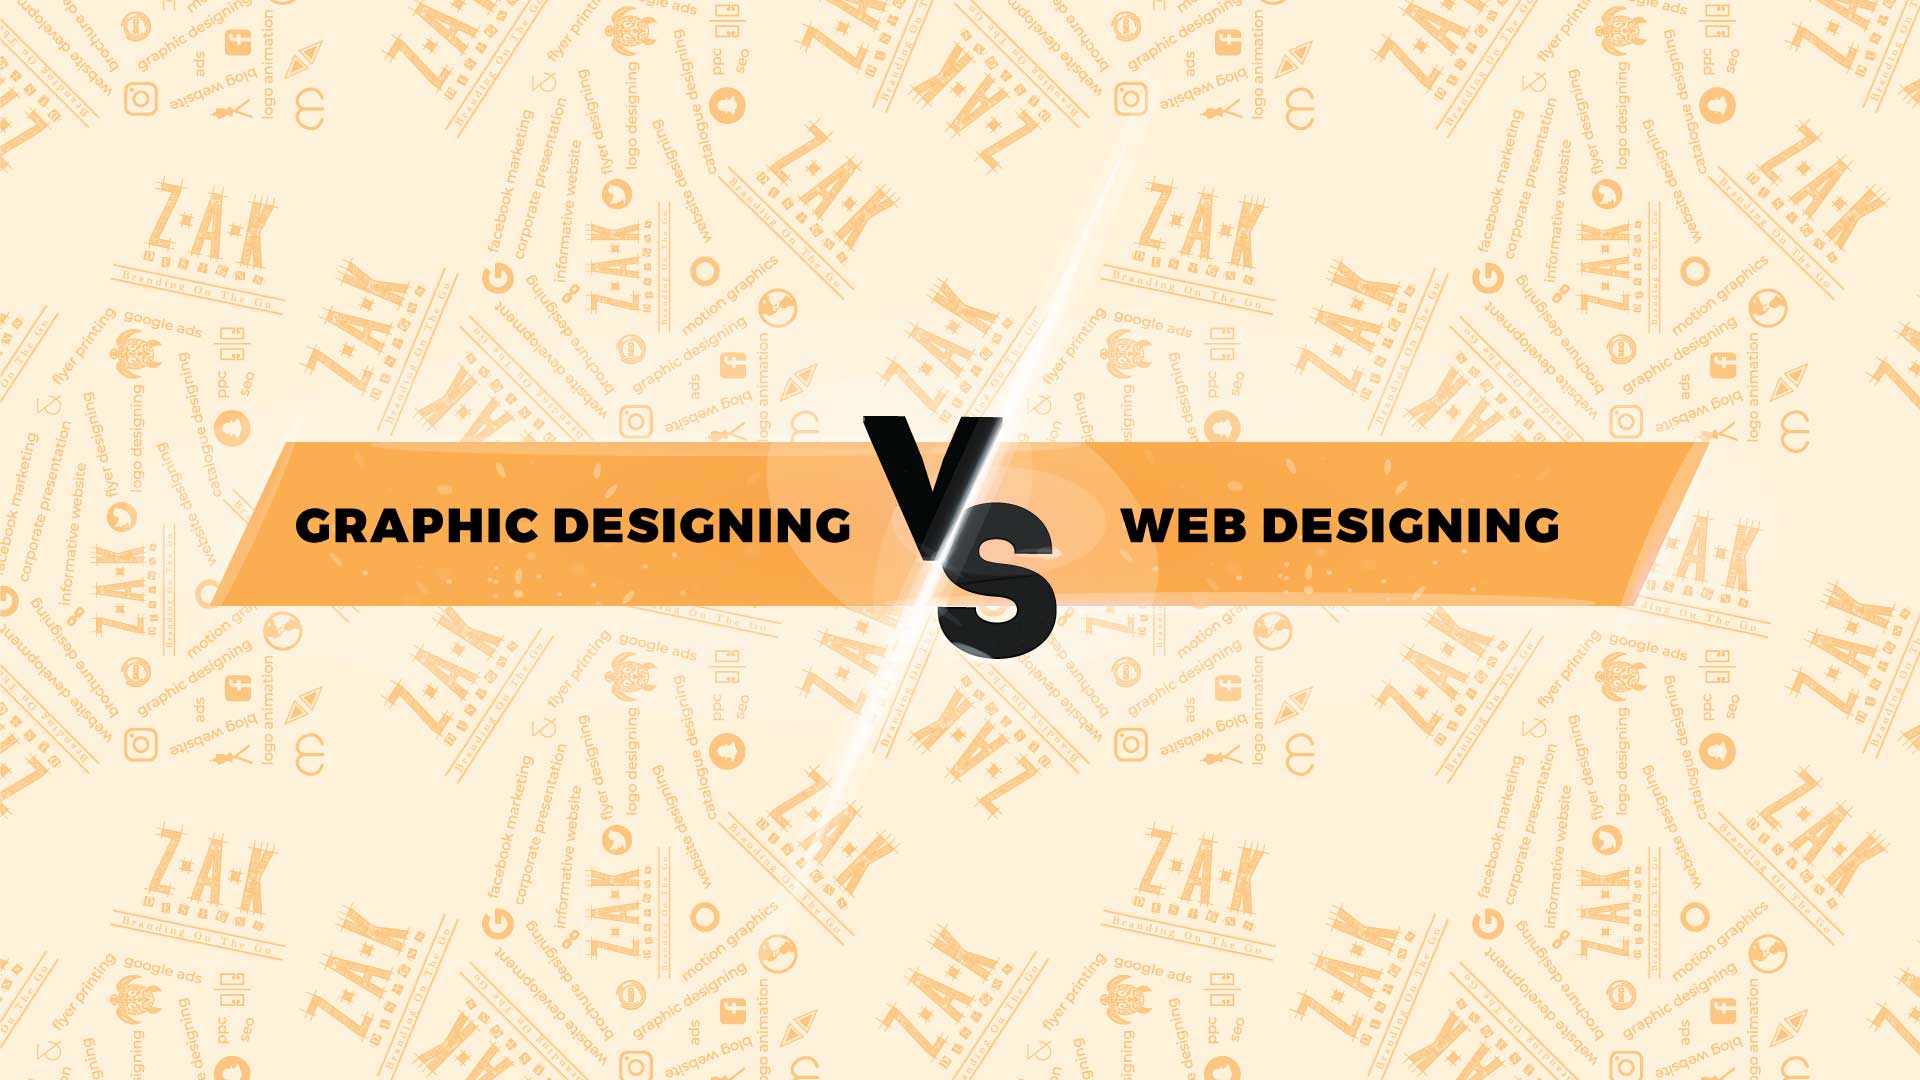 Blog on Graphic-Designing-vs-Website-Designing by Zain Ahmed Kamal